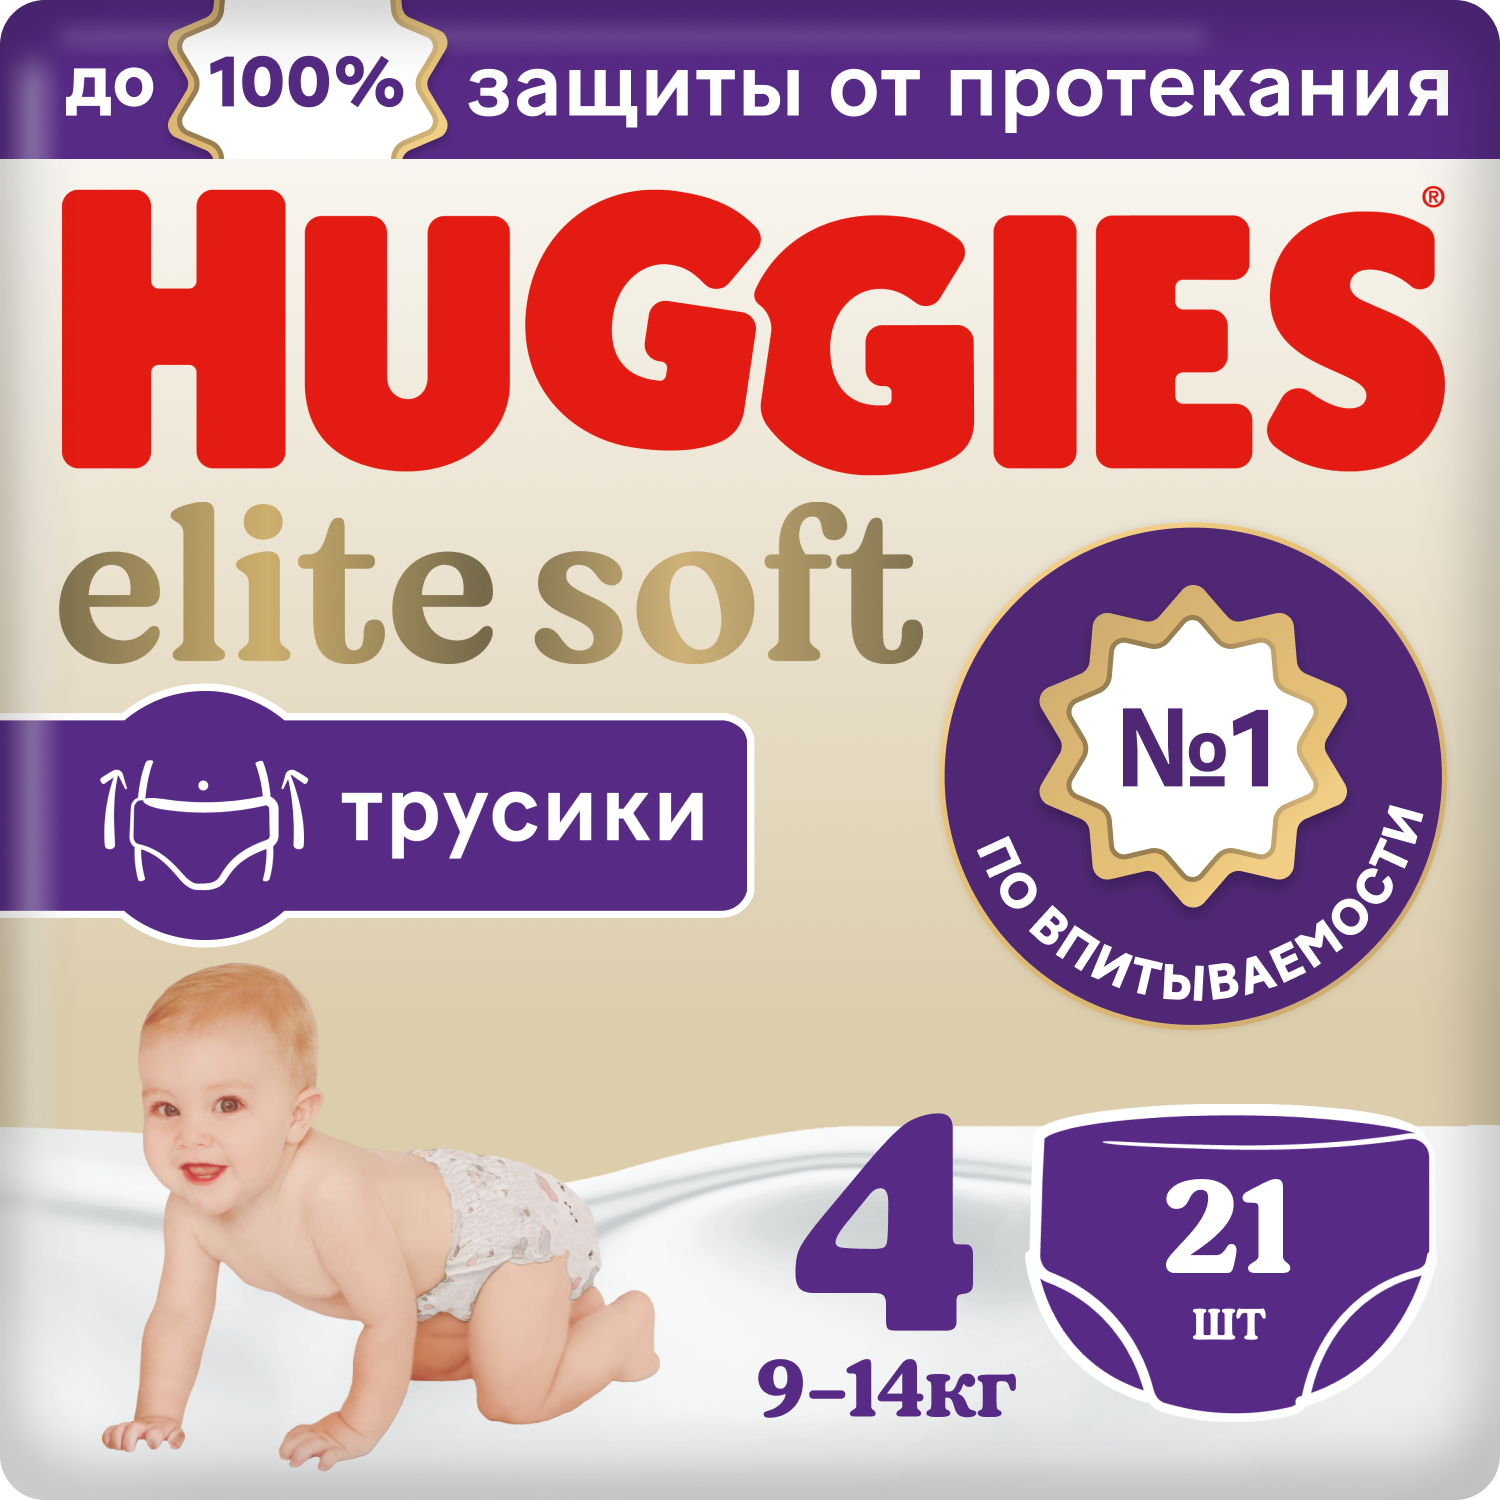   Huggies Elite Soft 9-14, 4 , 21